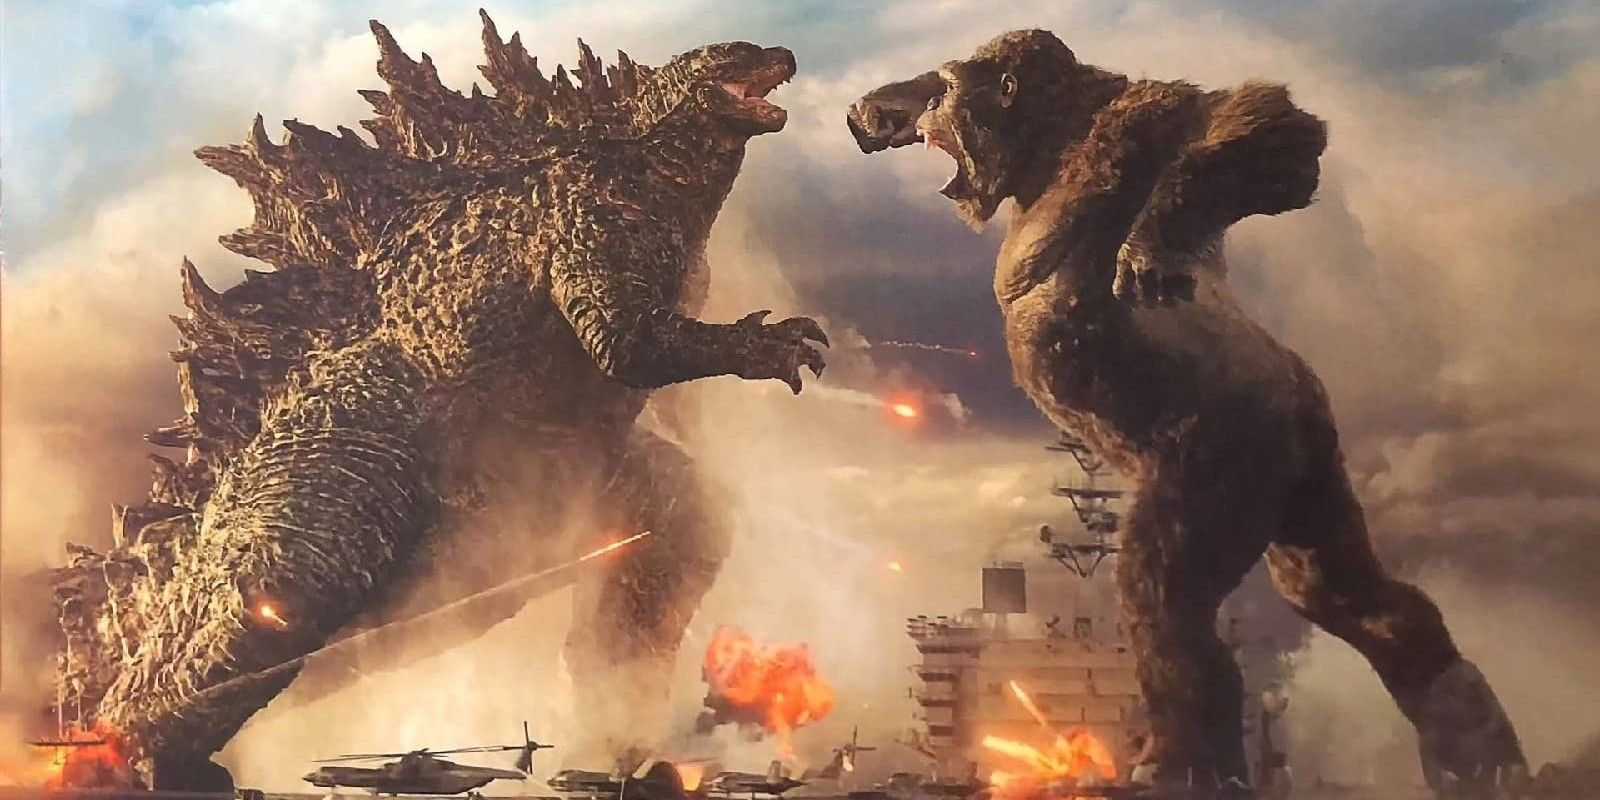 Godzilla and Kong fight on a military ship